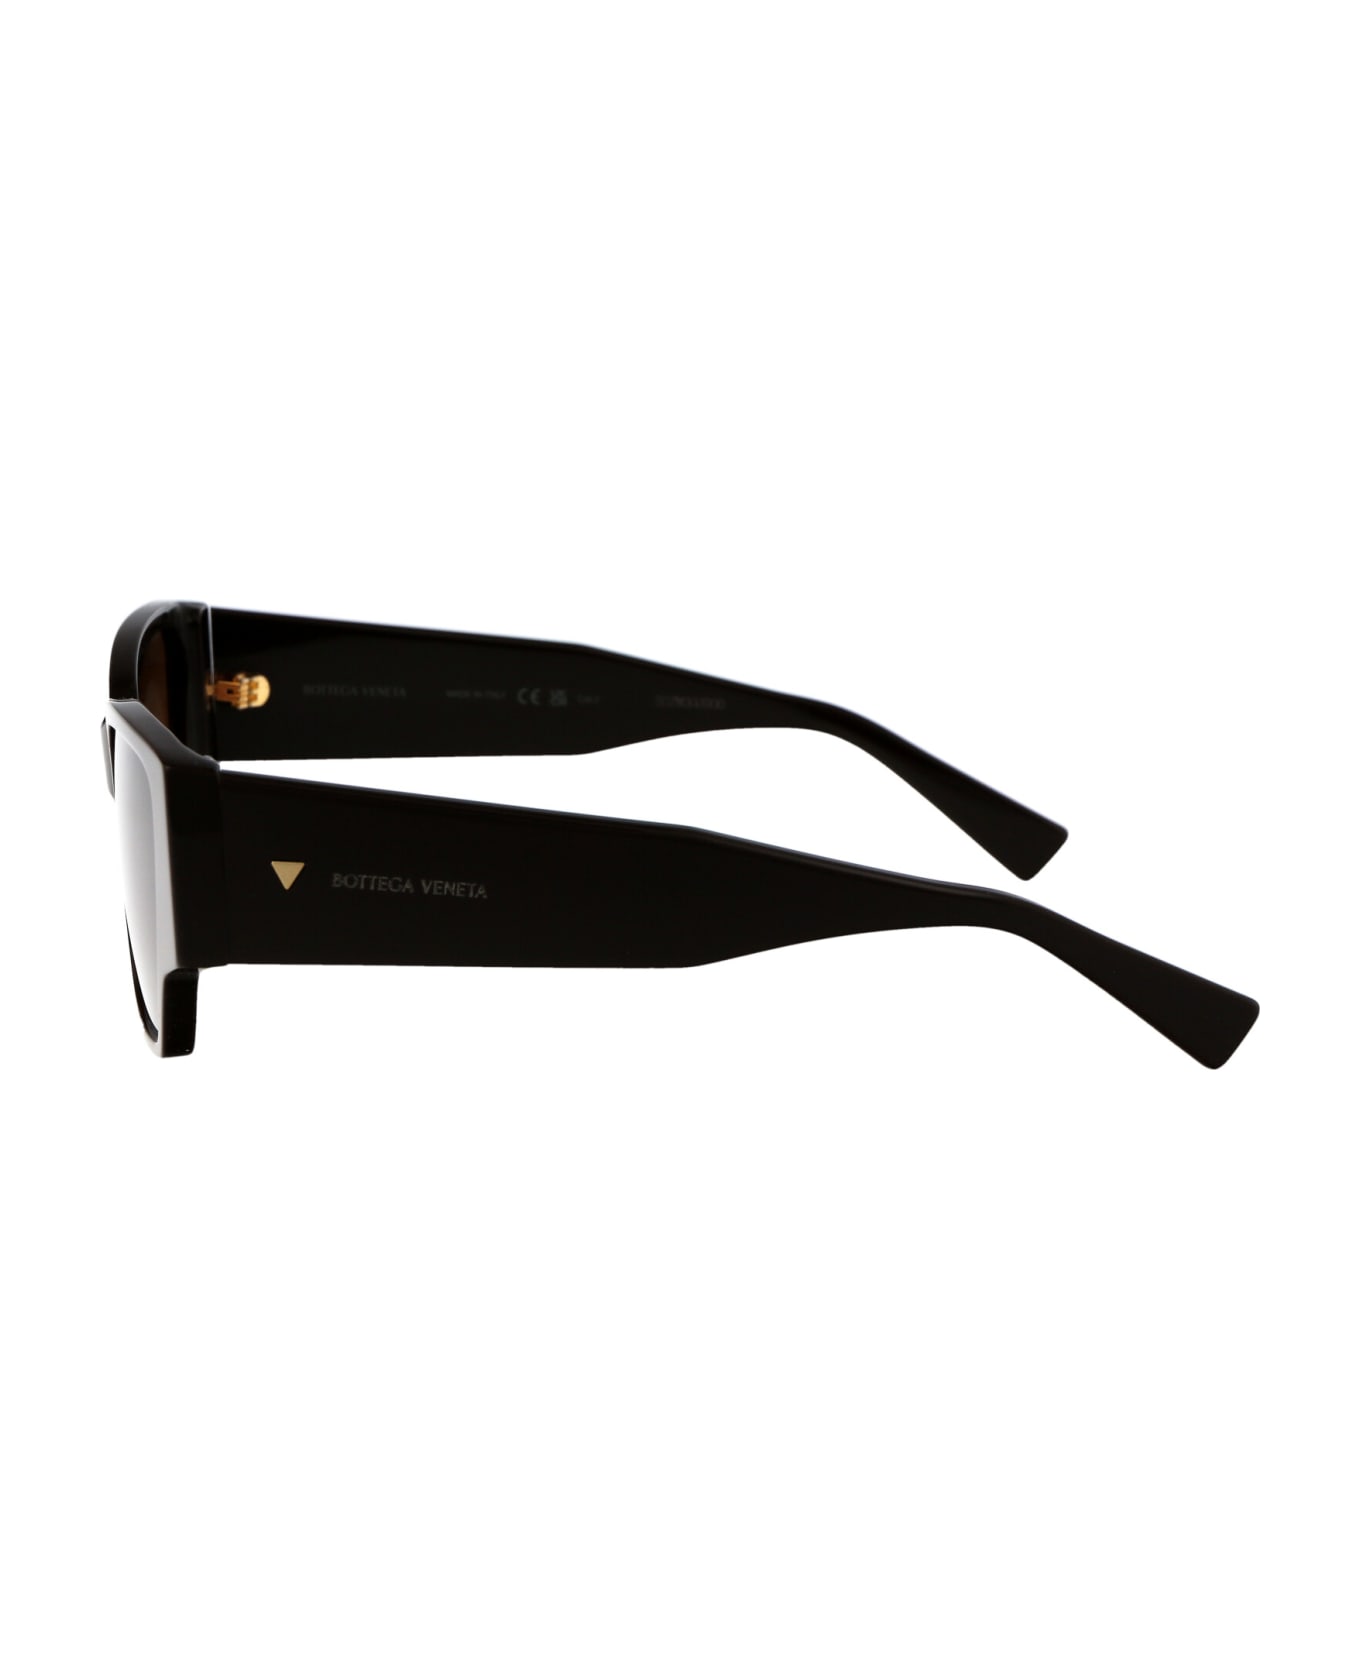 Bottega Veneta Eyewear Bv1285s Sunglasses - 003 BROWN BROWN BROWN サングラス